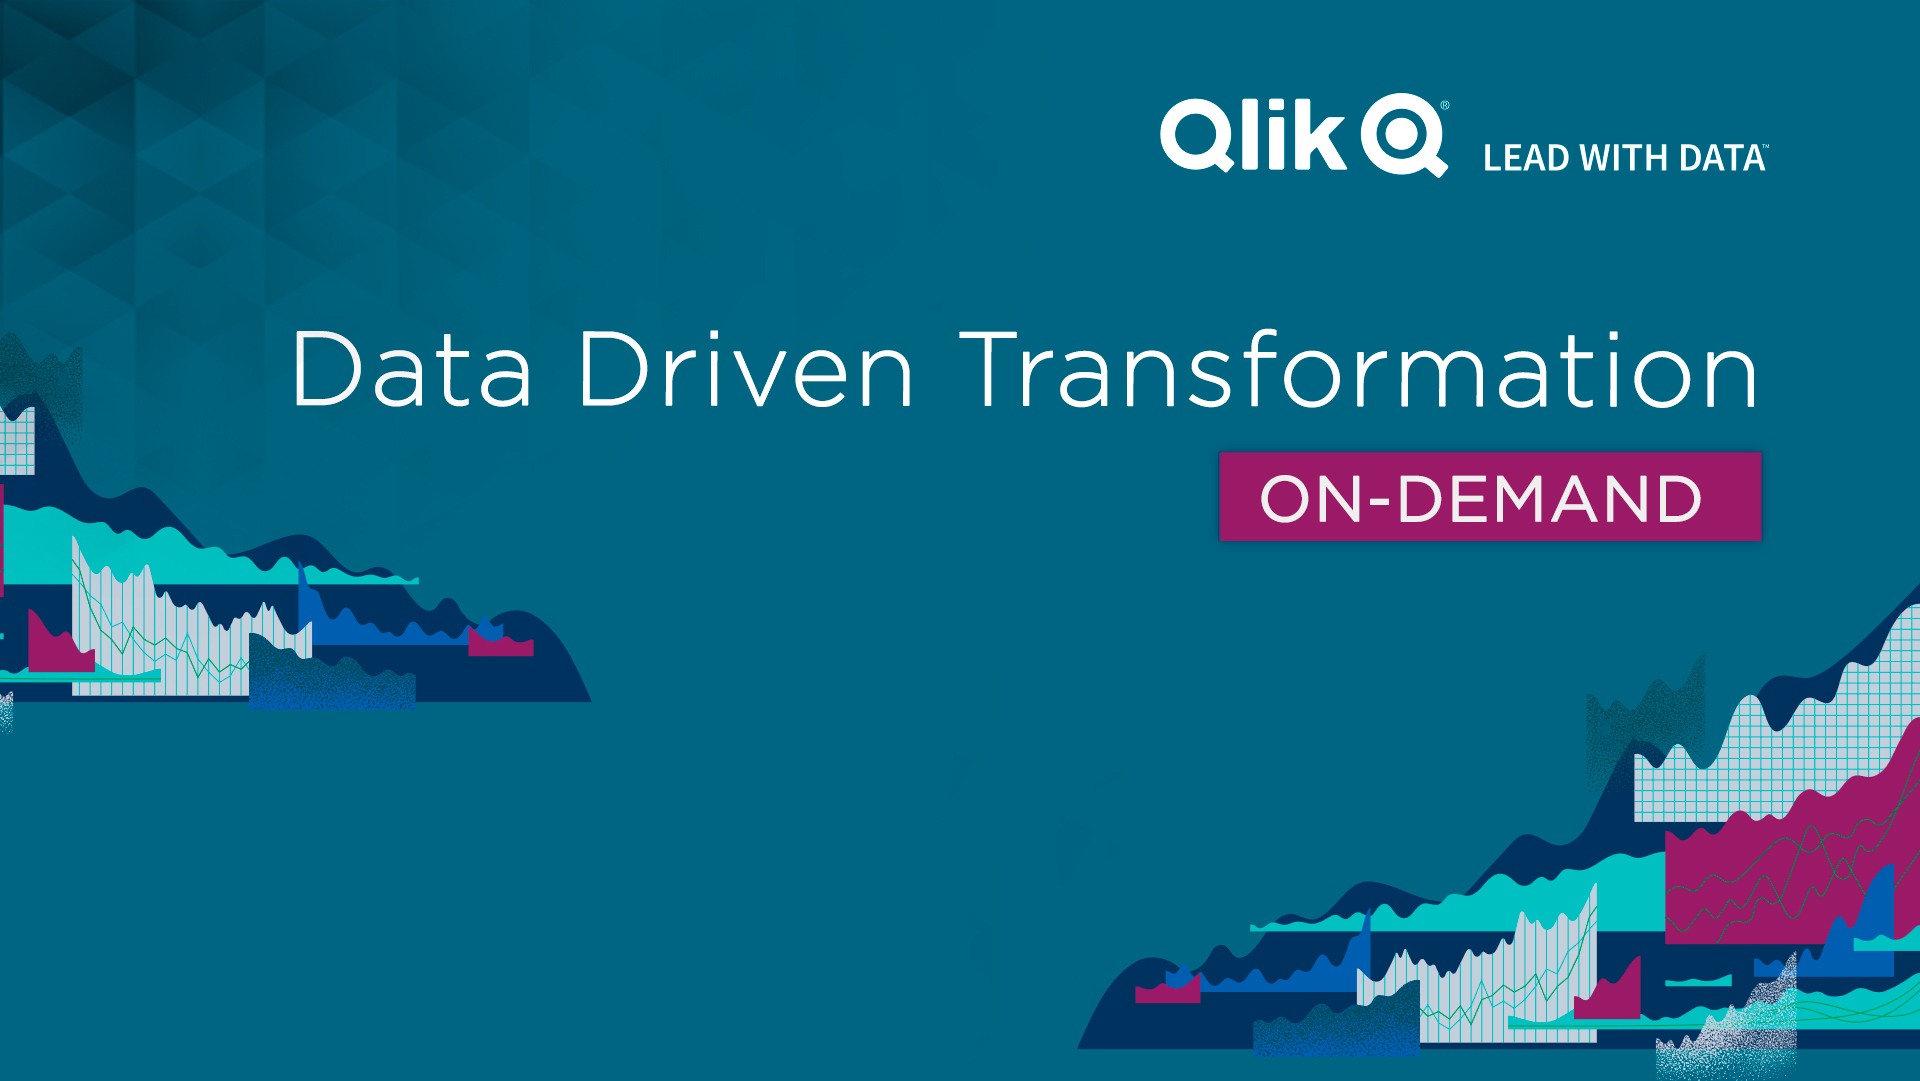 Climber Qlik Data Driven Transformation On-demand